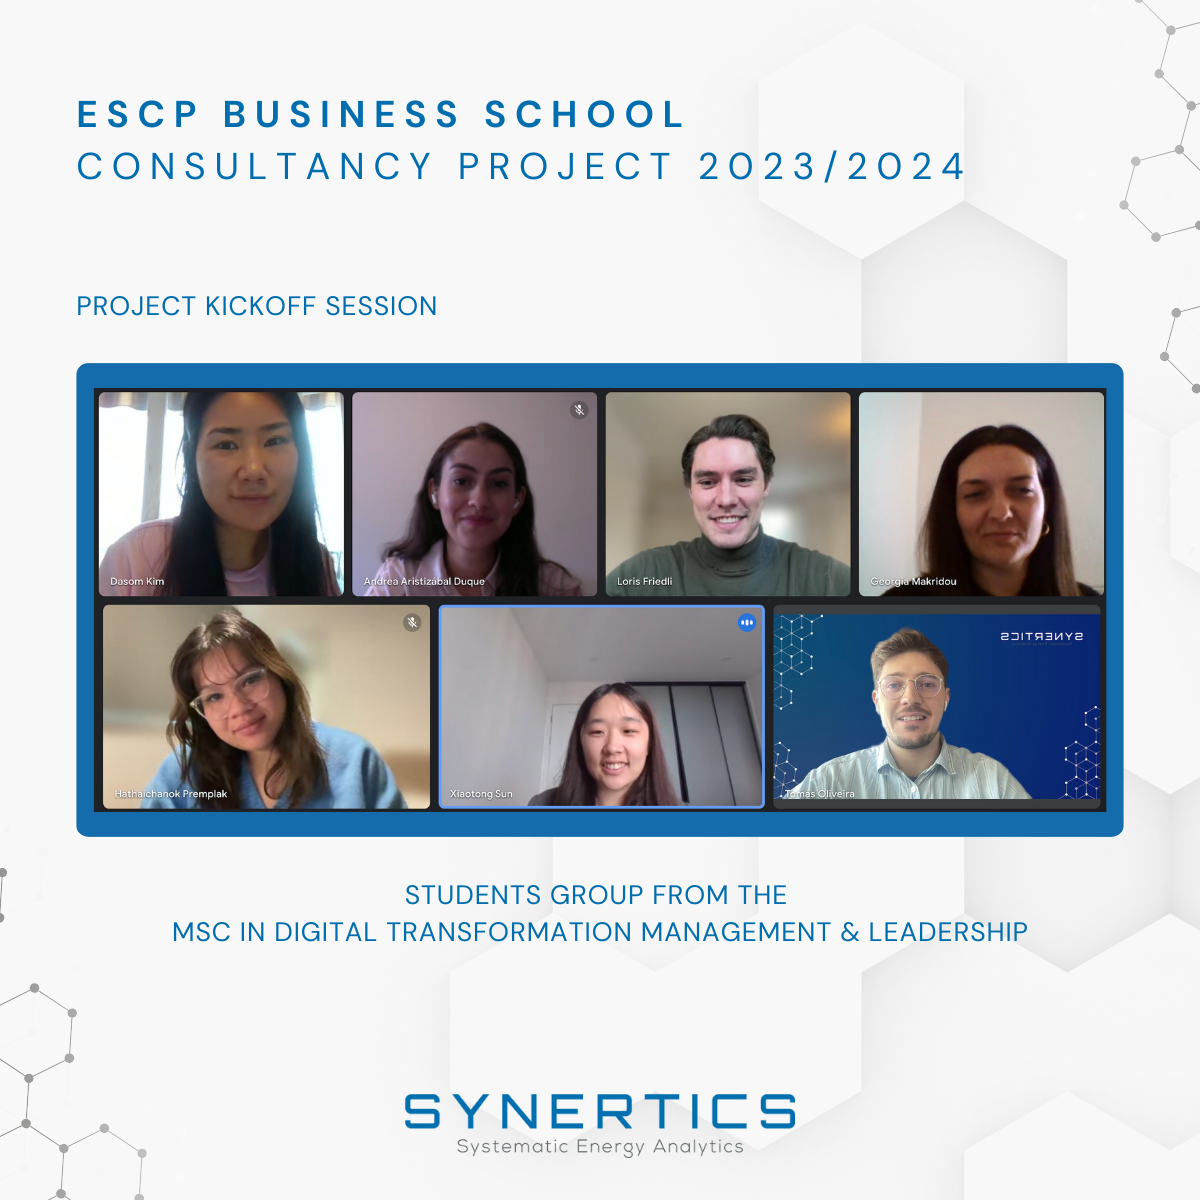 ESCP Business School Consultancy project 2023/2024 kickoff